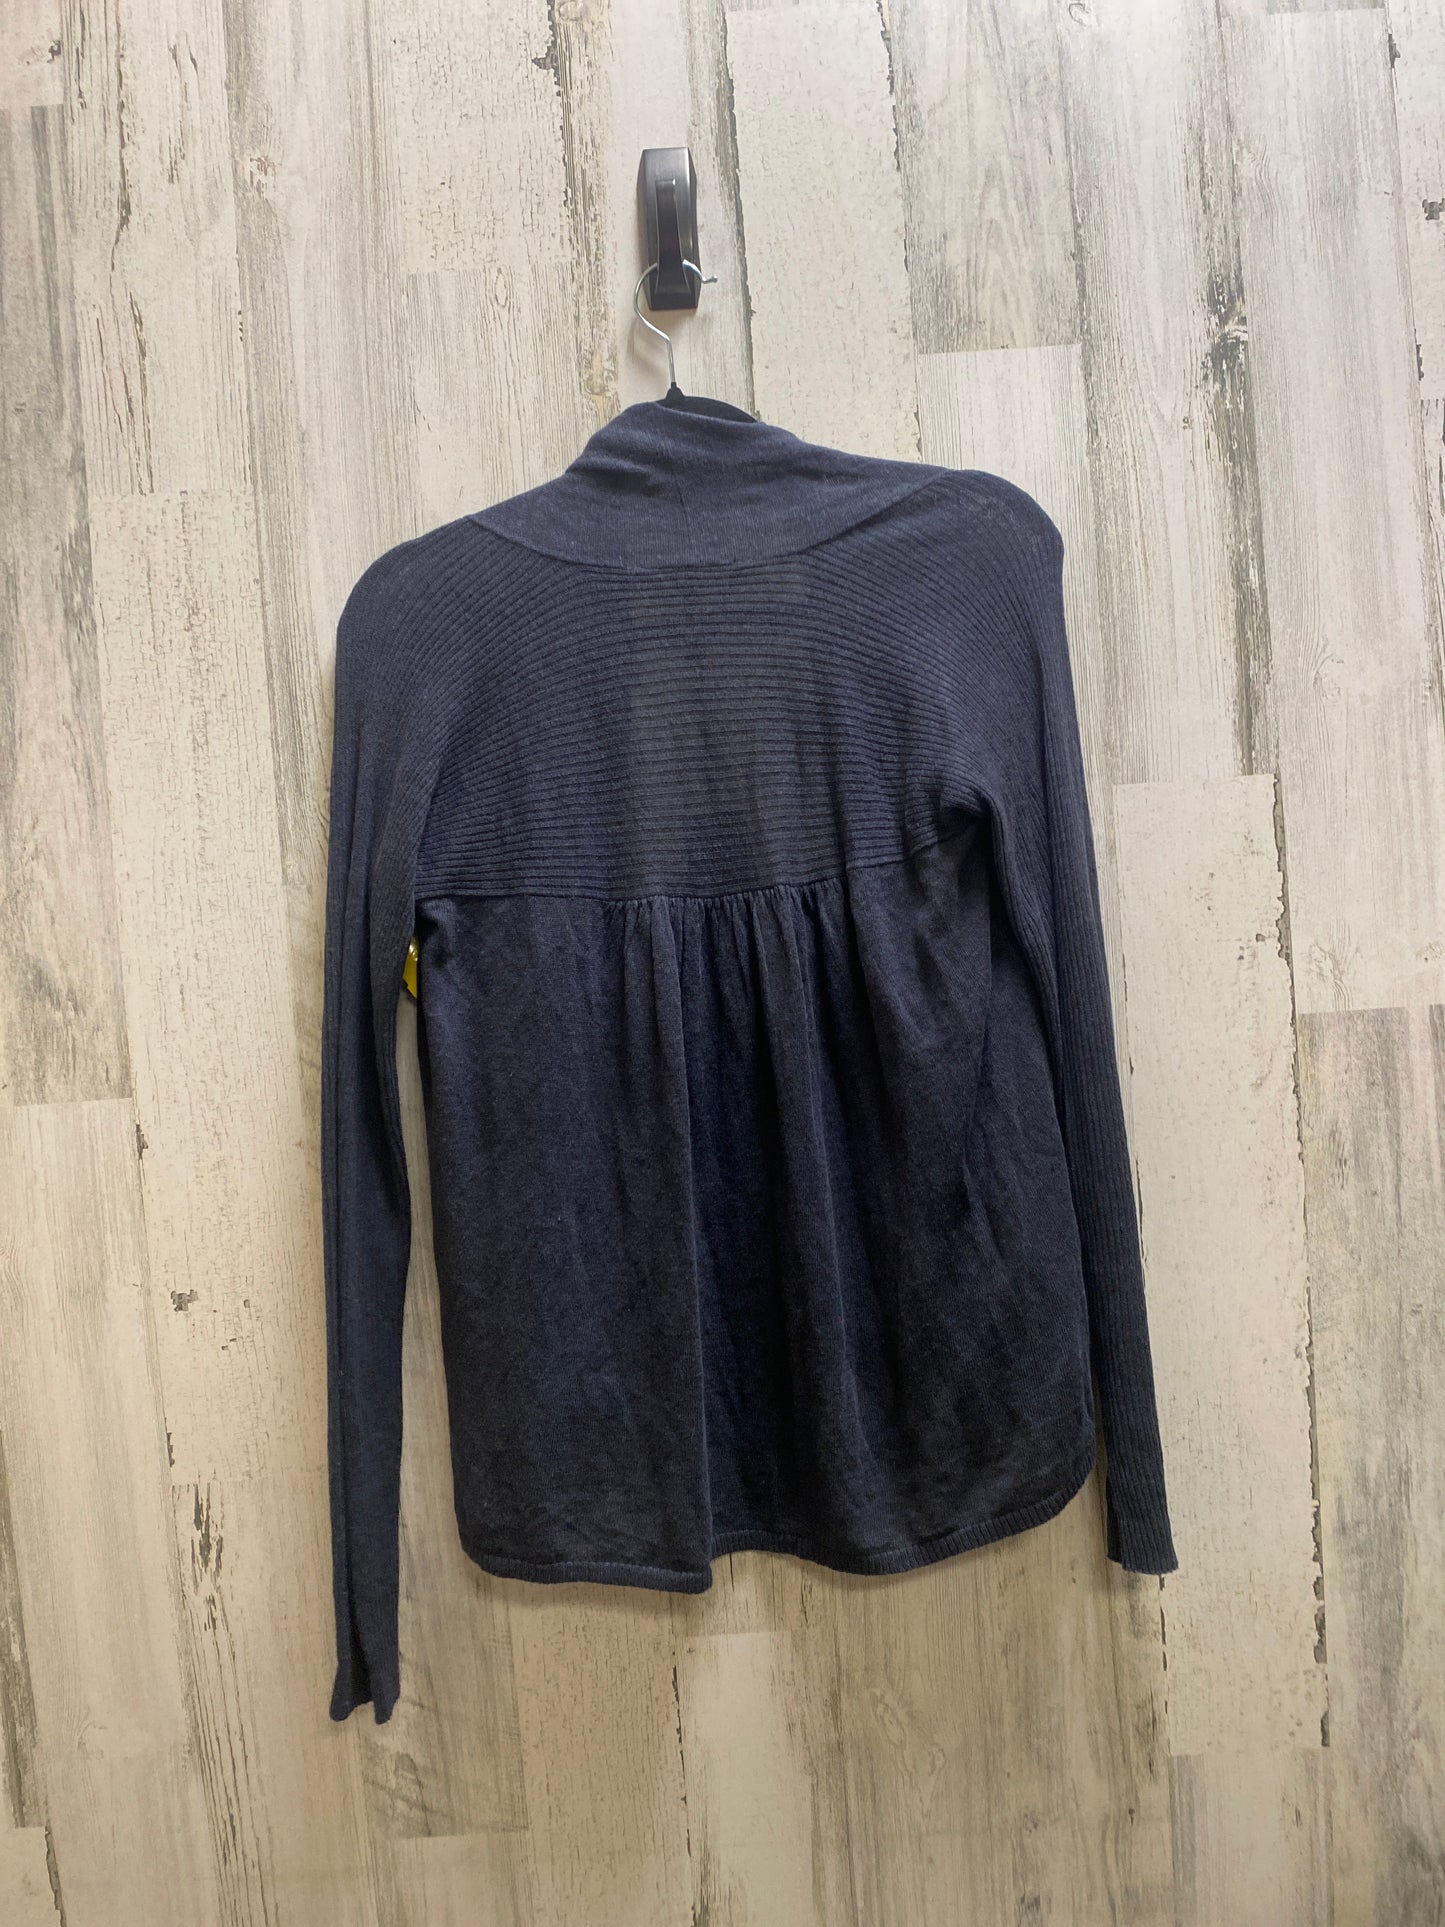 Sweater Cardigan By Bcbg  Size: Xs